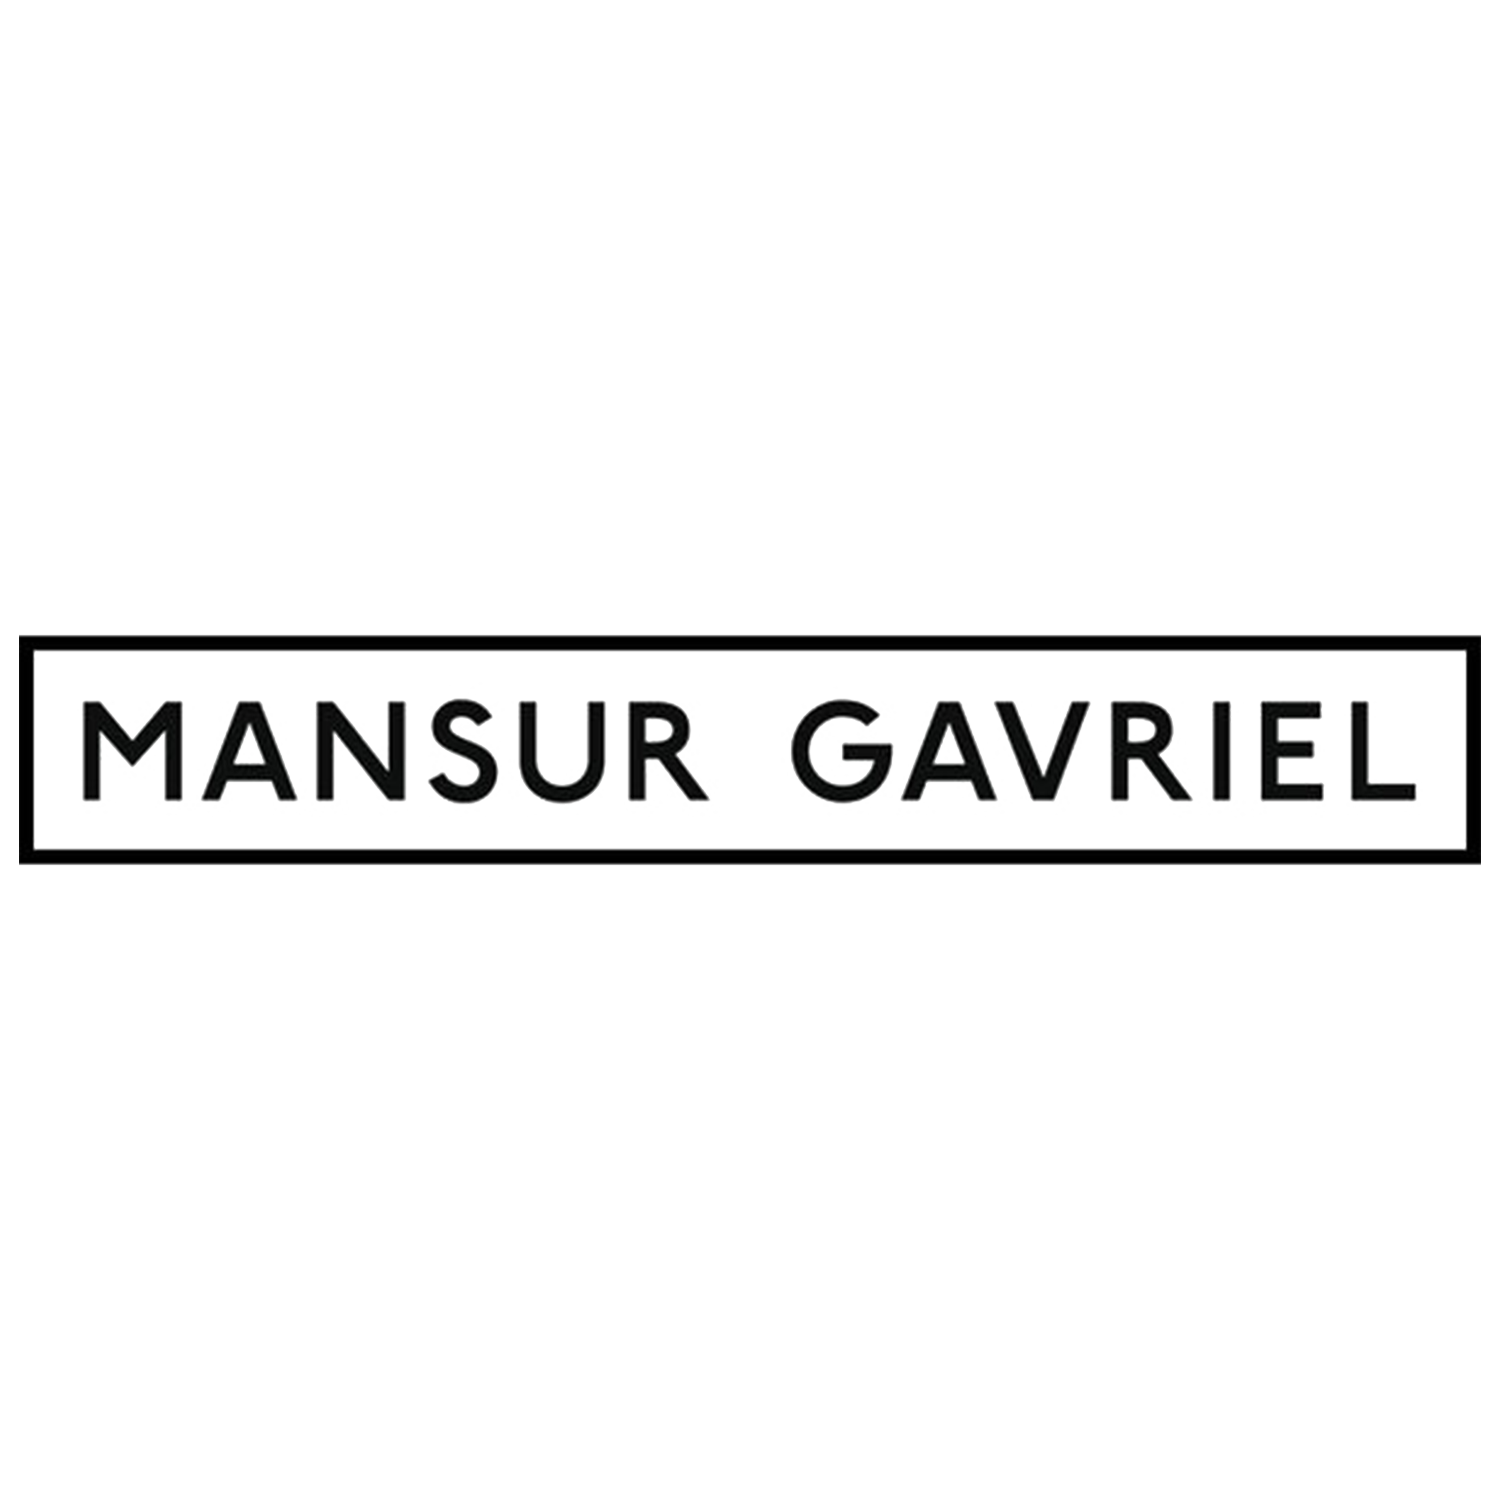 Mansur Gavriel